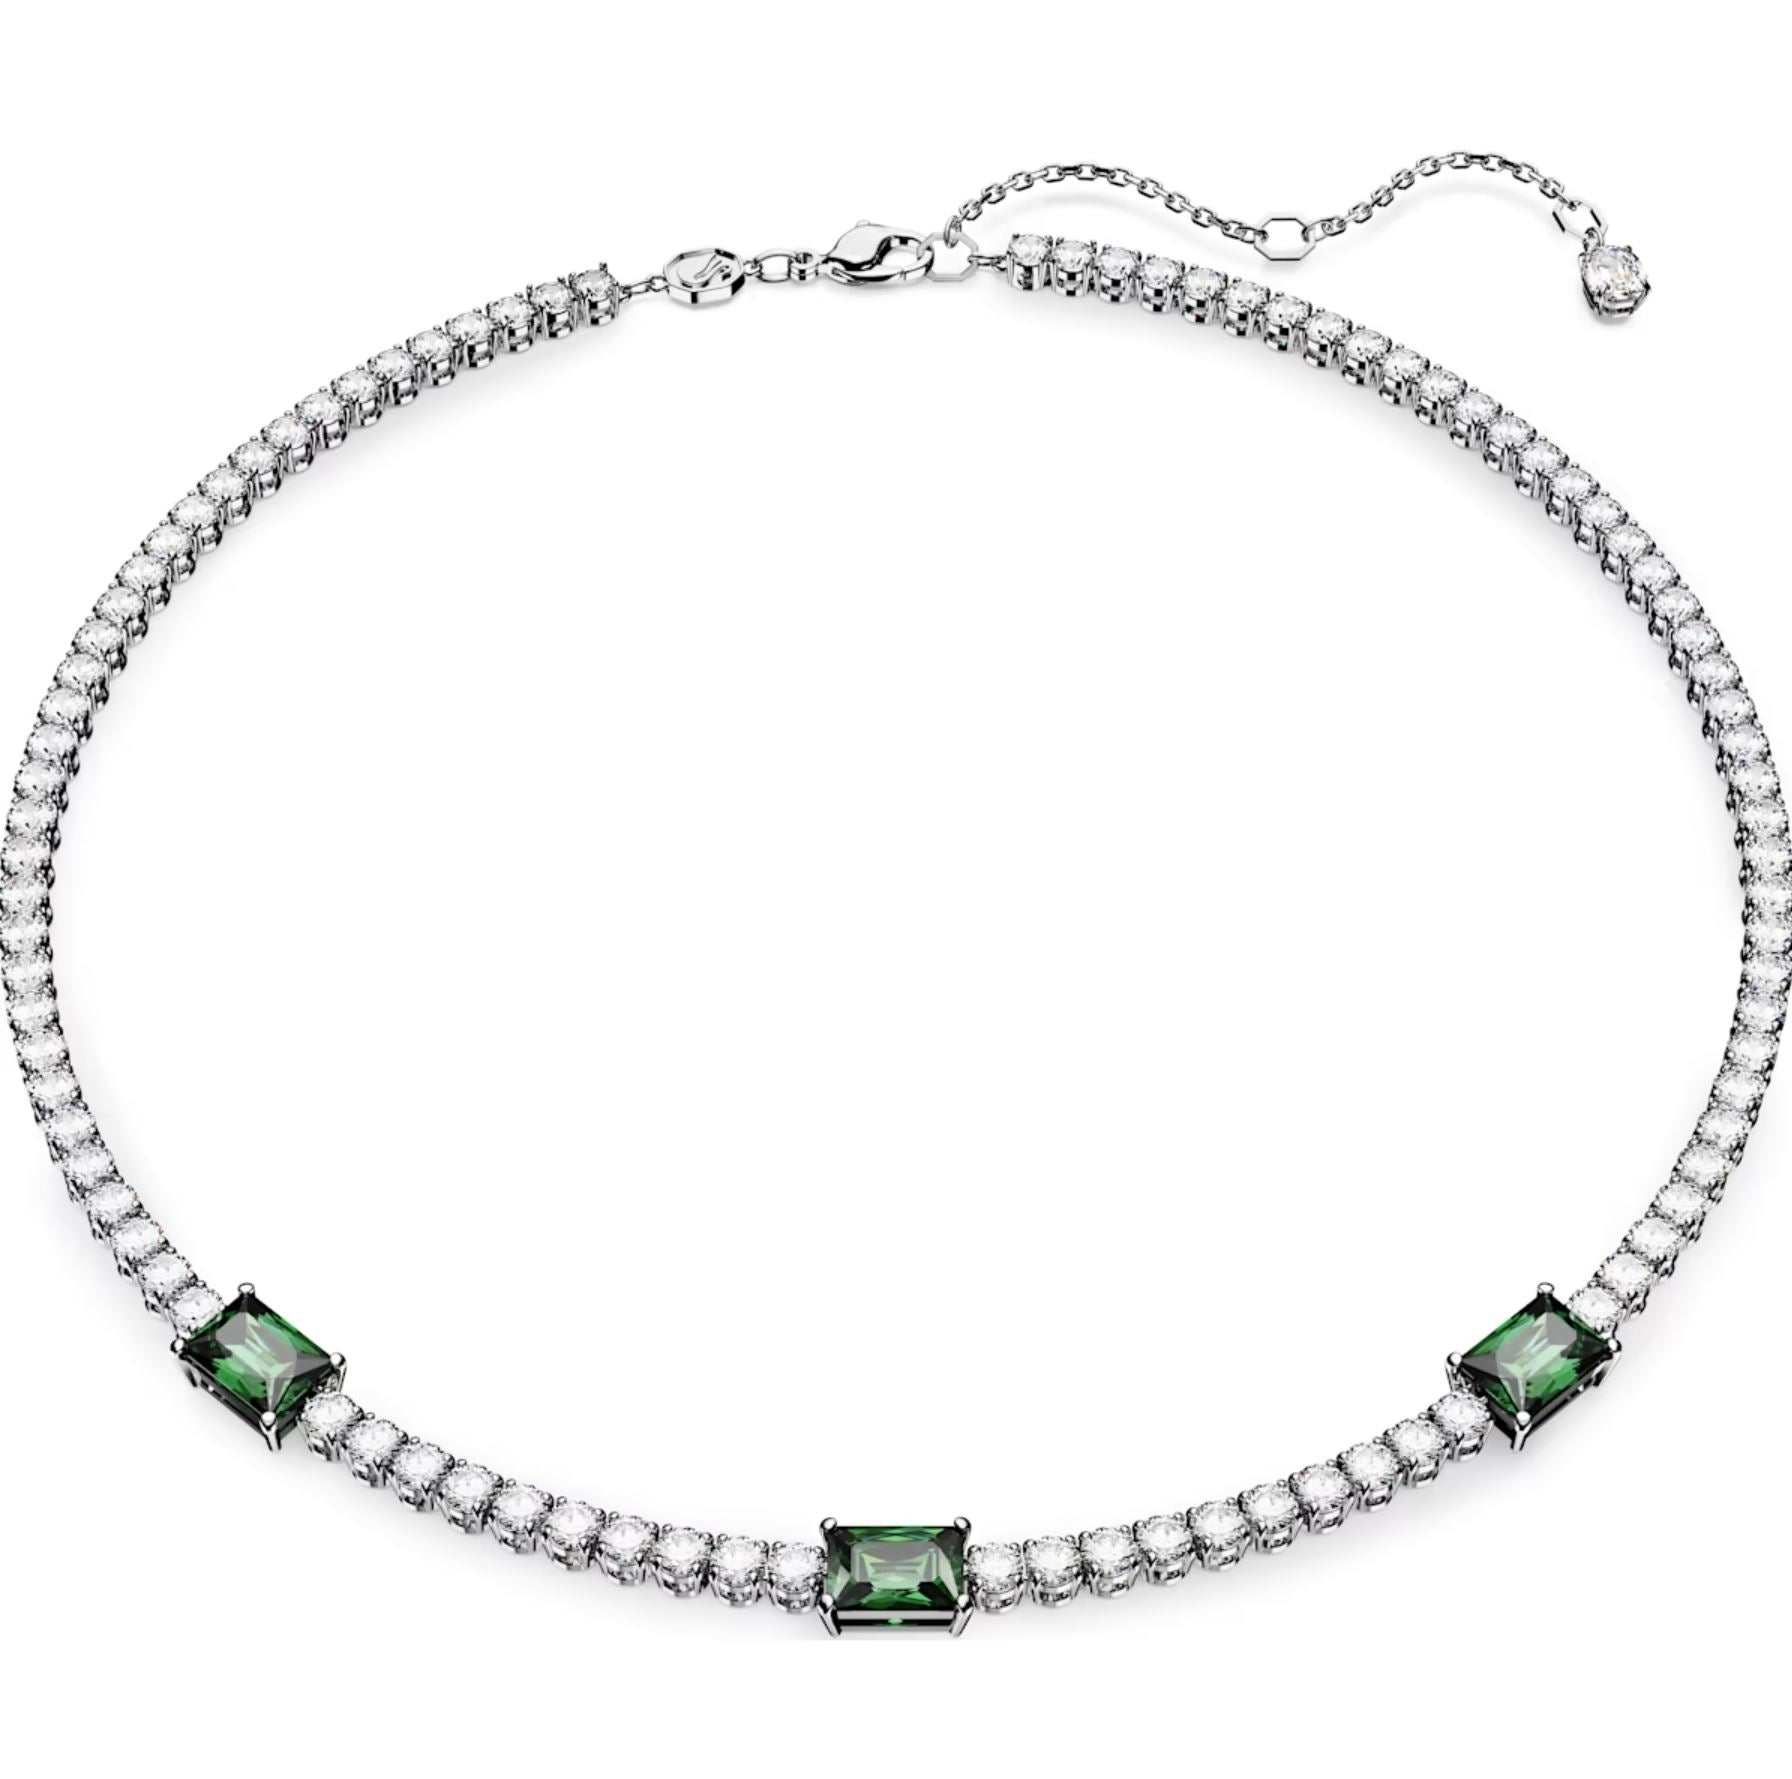 Swarovski Matrix Rhodium Plated Mixed Cut Green Crystal Tennis Necklace